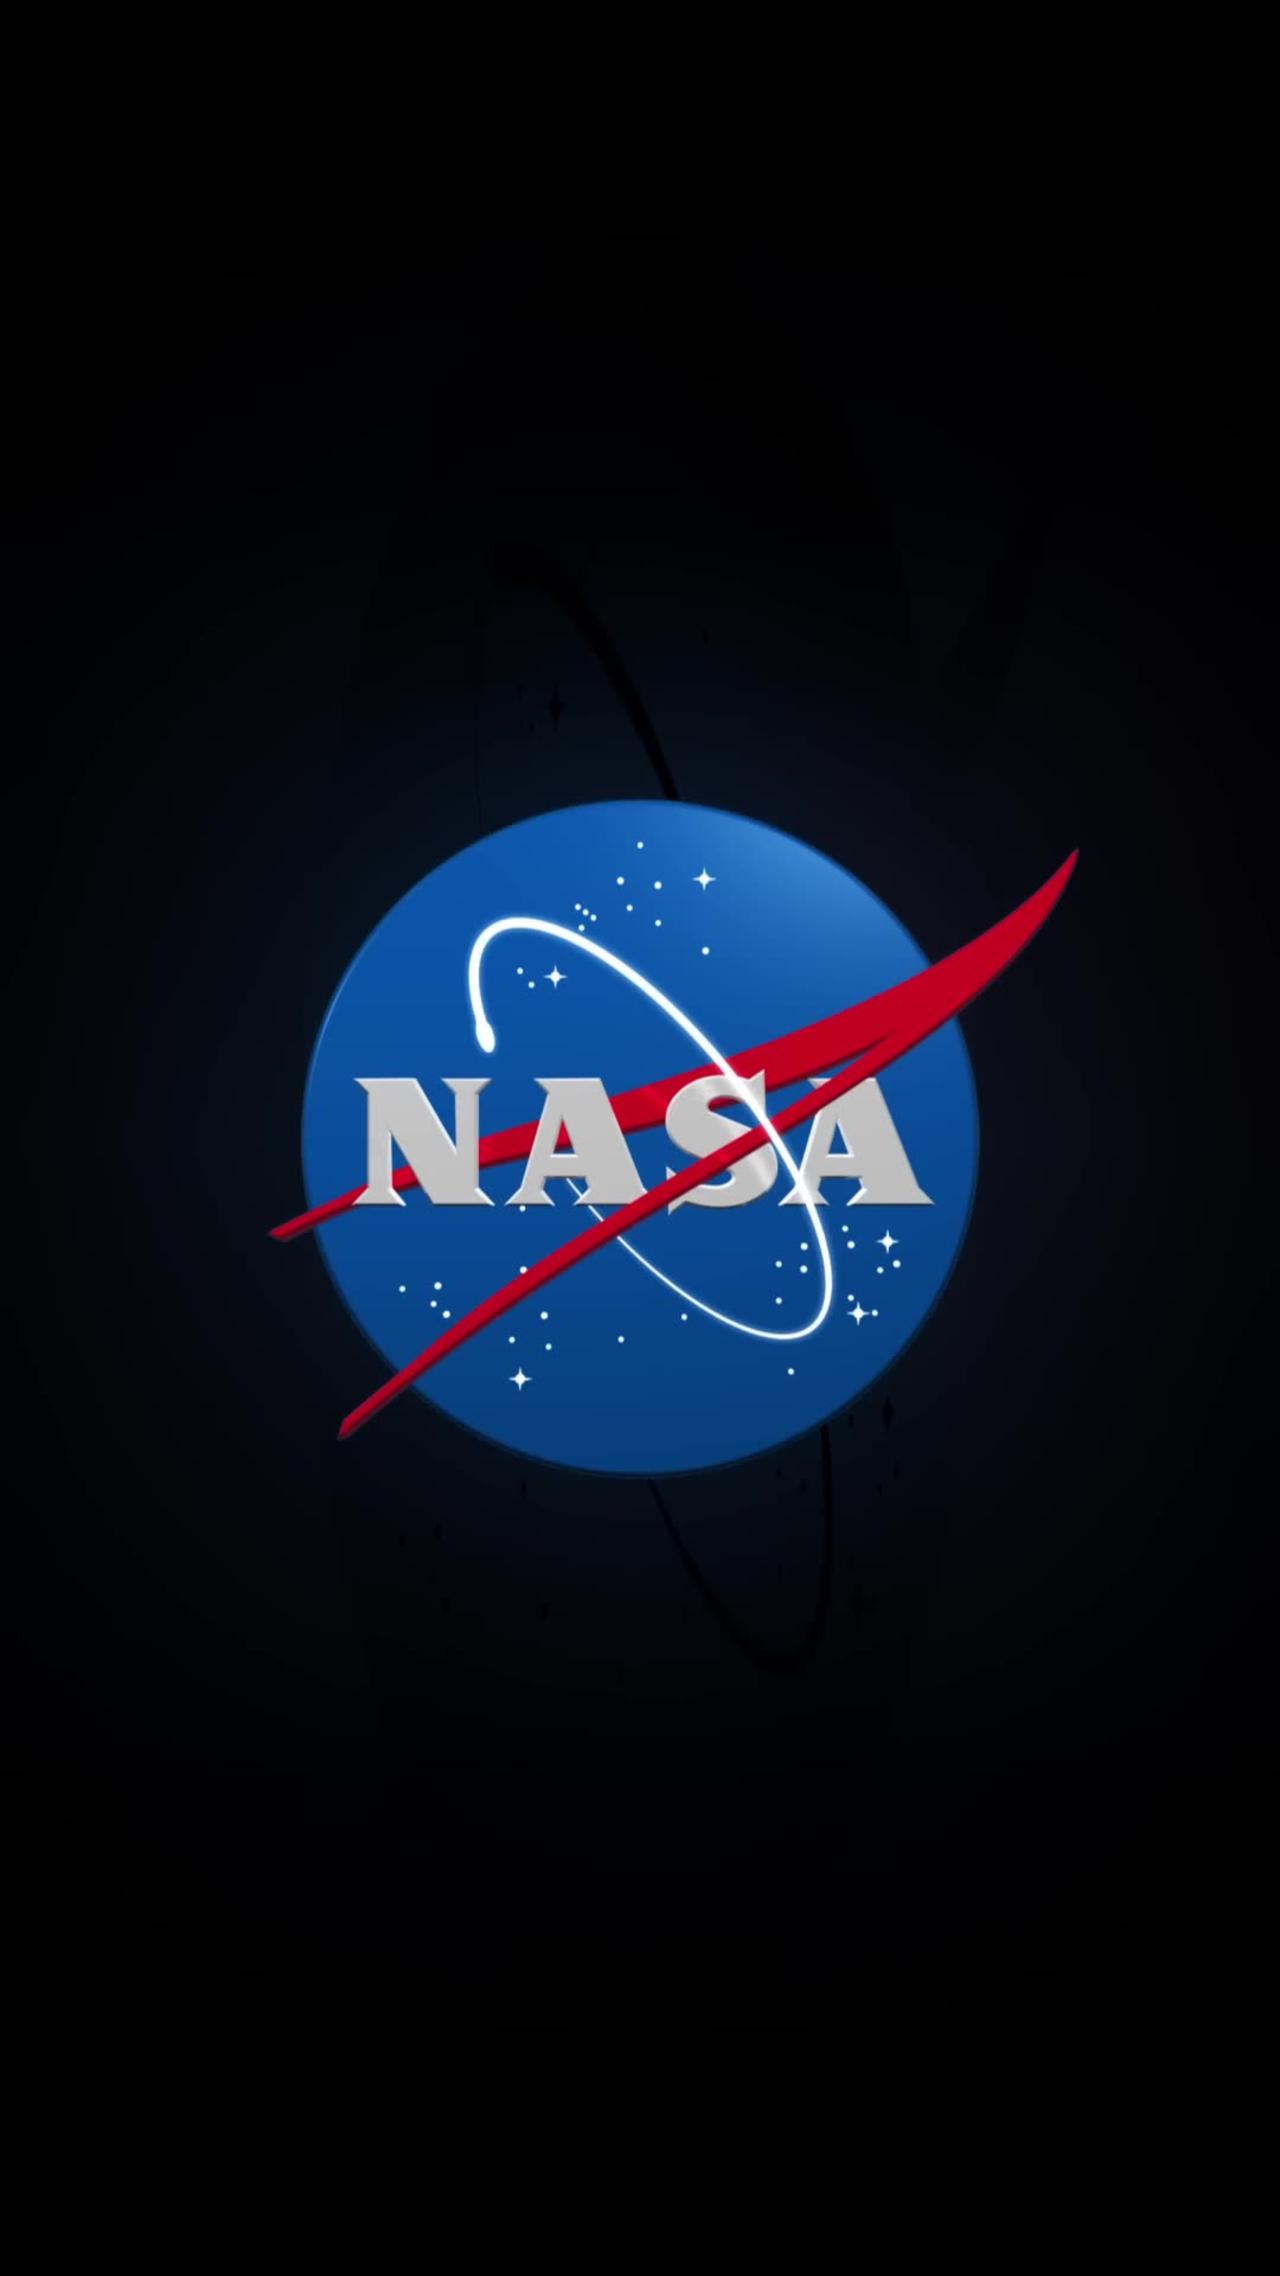 Artemis II Astronauts’ First Look at Their Lunar Spacecraft